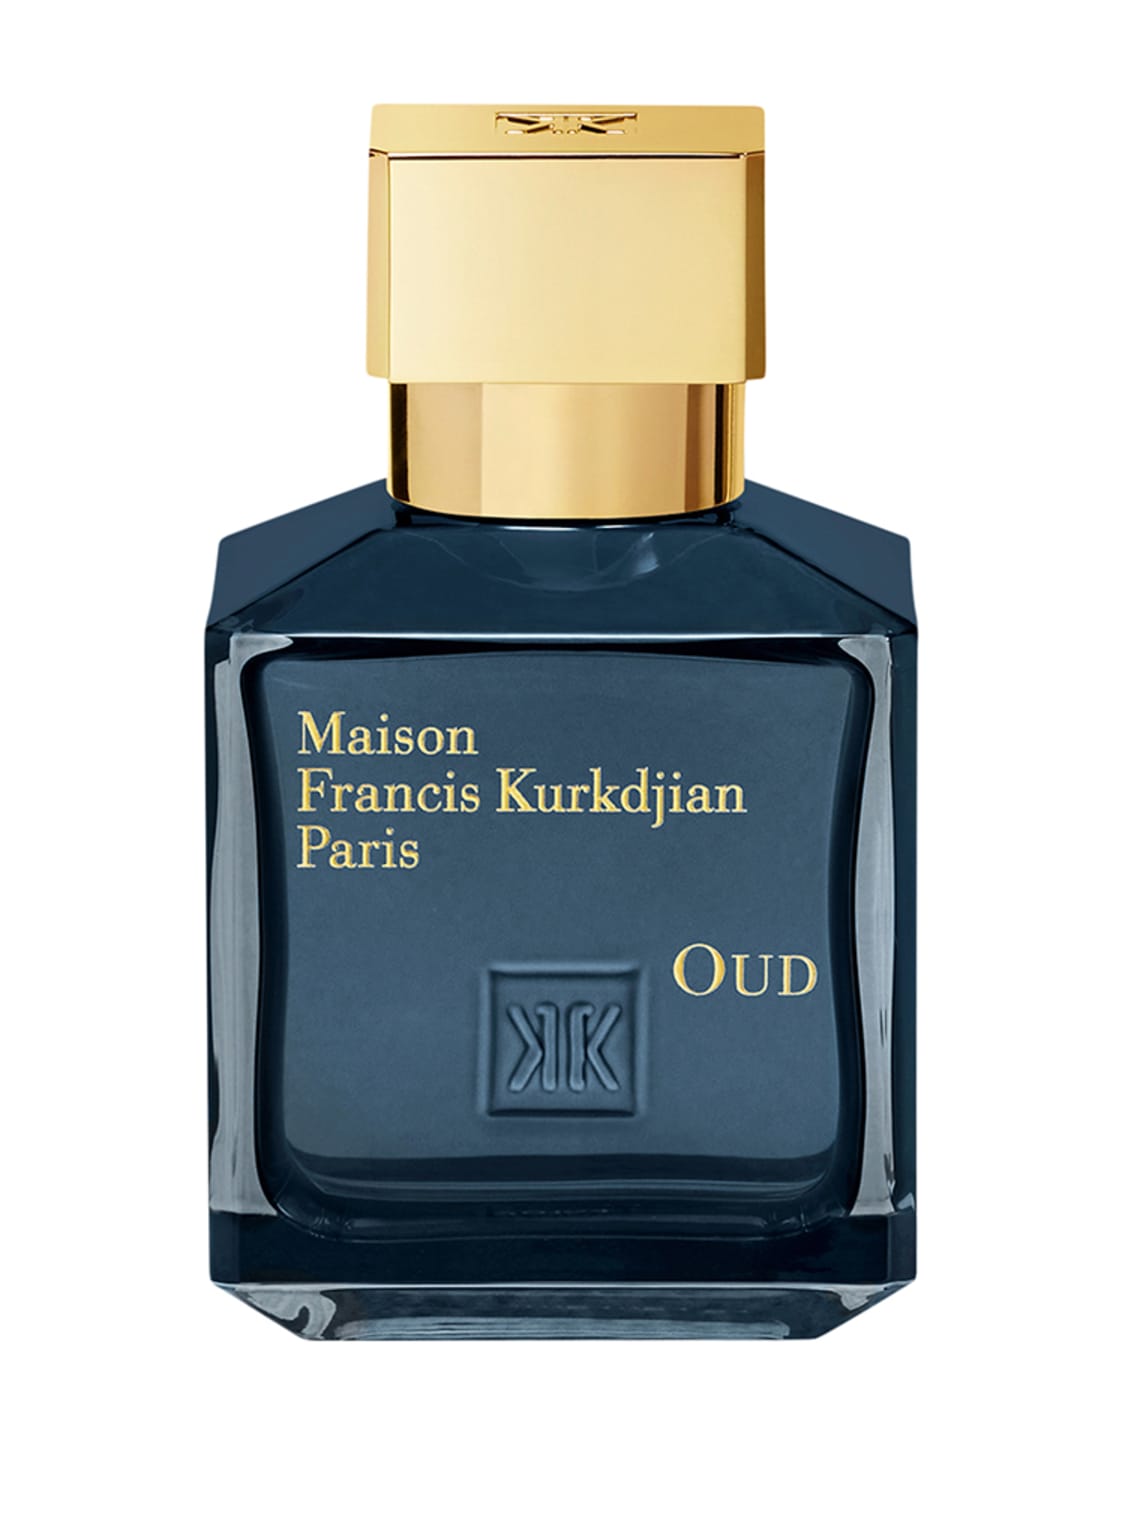 Maison Francis Kurkdjian Paris Oud Eau de Parfum 70 ml von Maison Francis Kurkdjian Paris